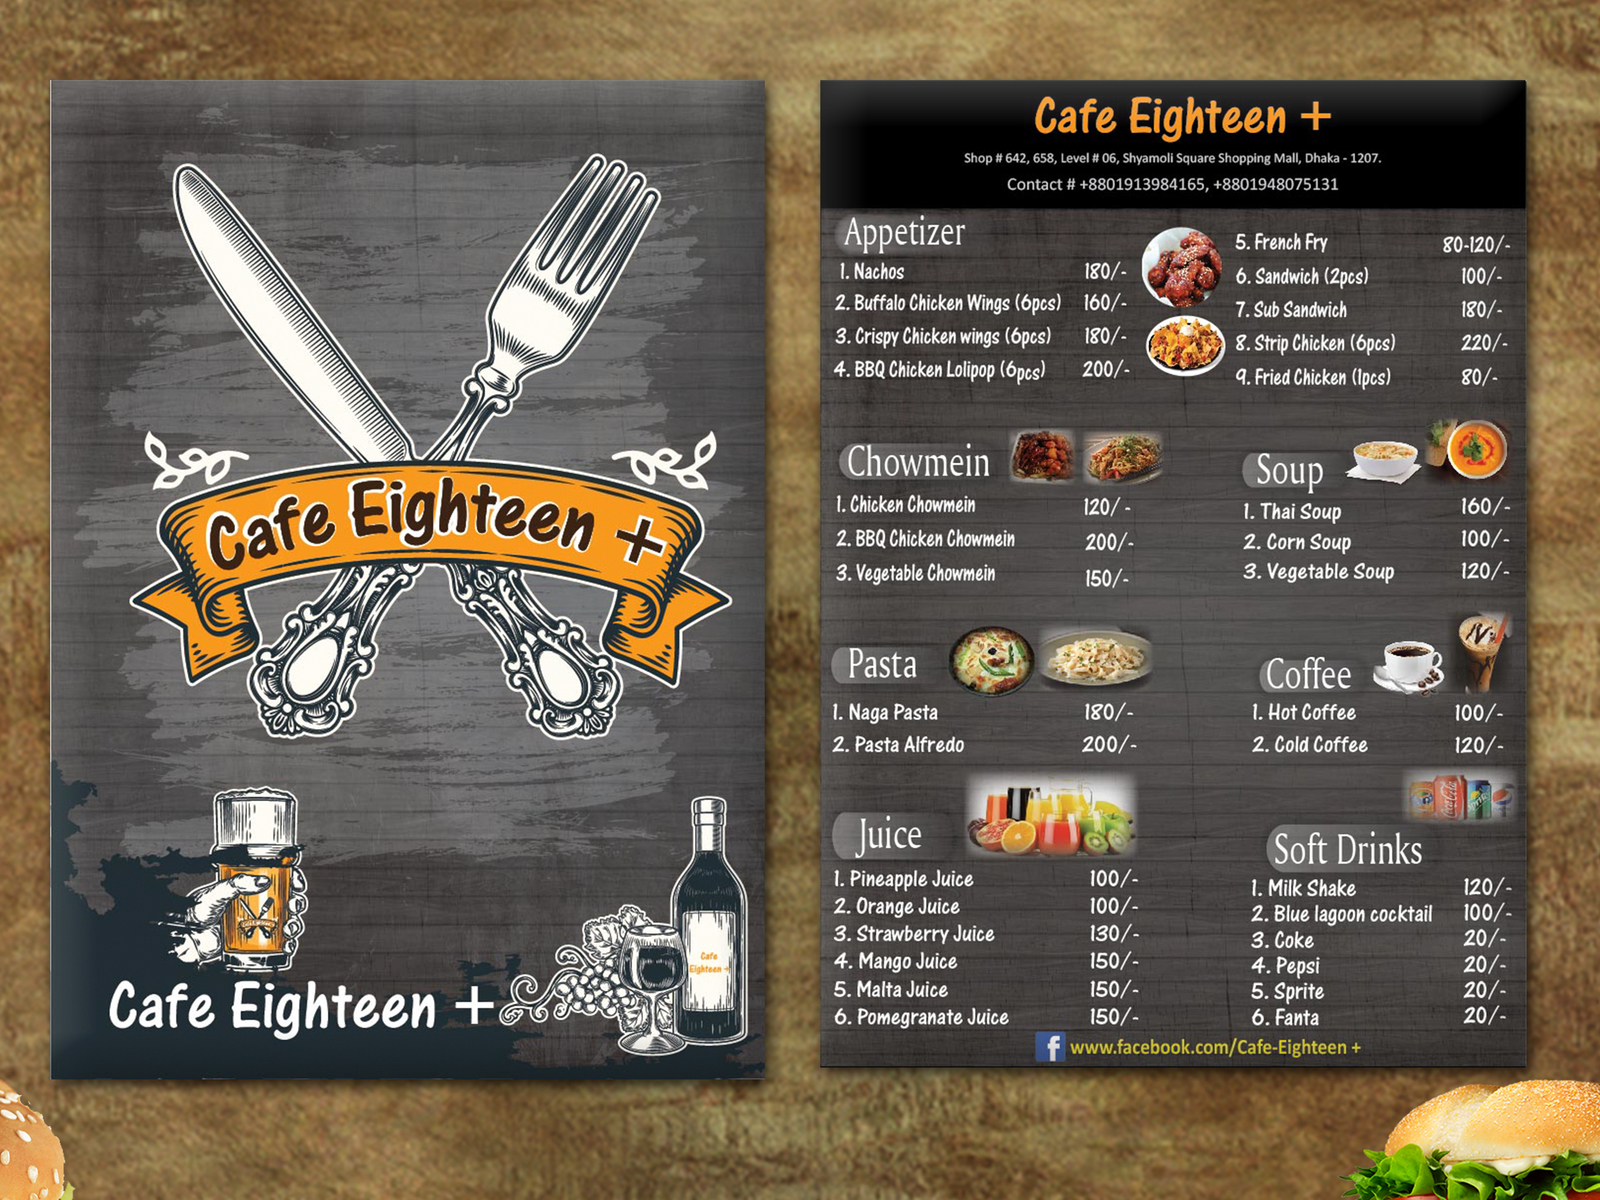 Cafe 18+ Food Menu Card Design by Parvez Raton on Dribbble